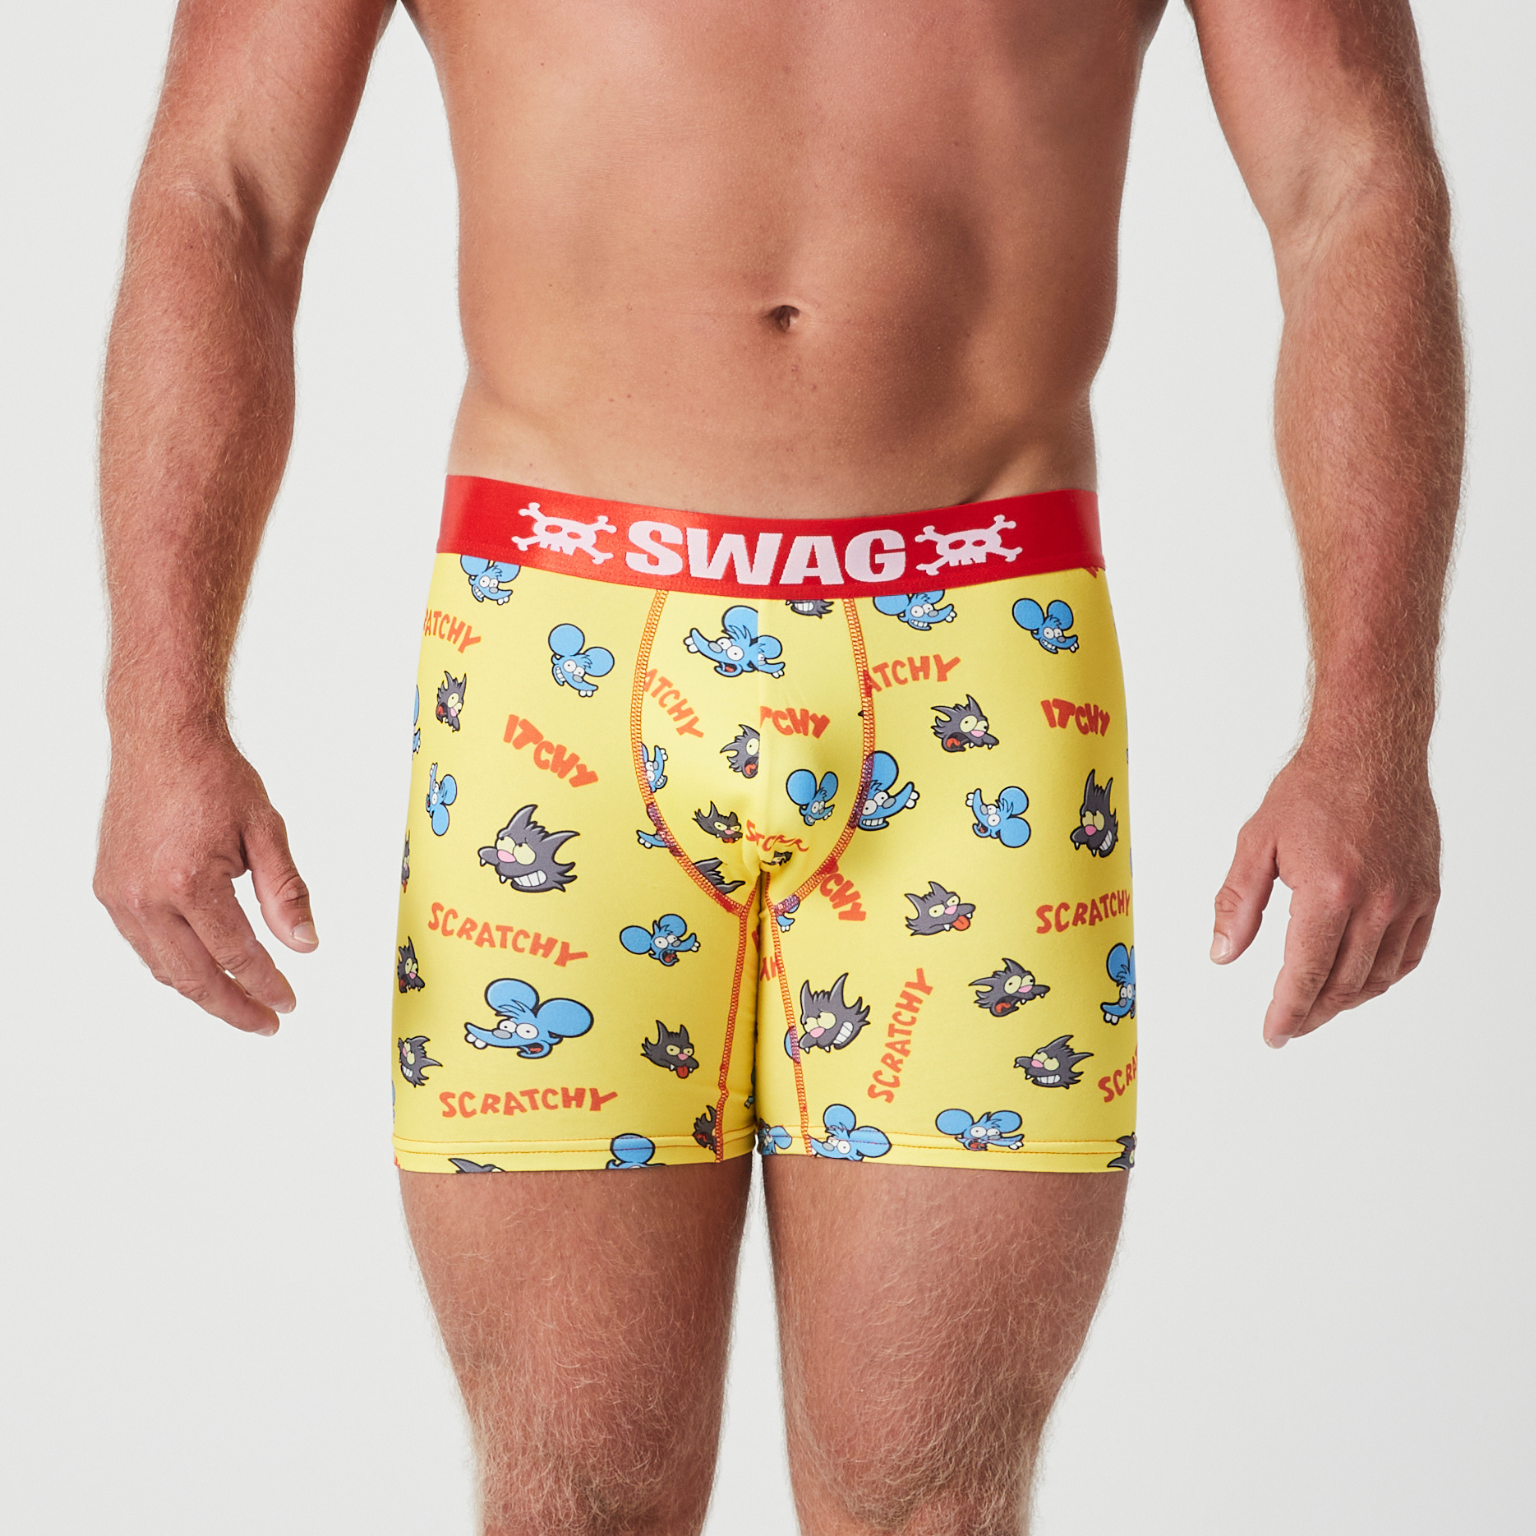 SWAG Boxers AU: Fun and Outlandish Men's Boxers, Underwear & Socks